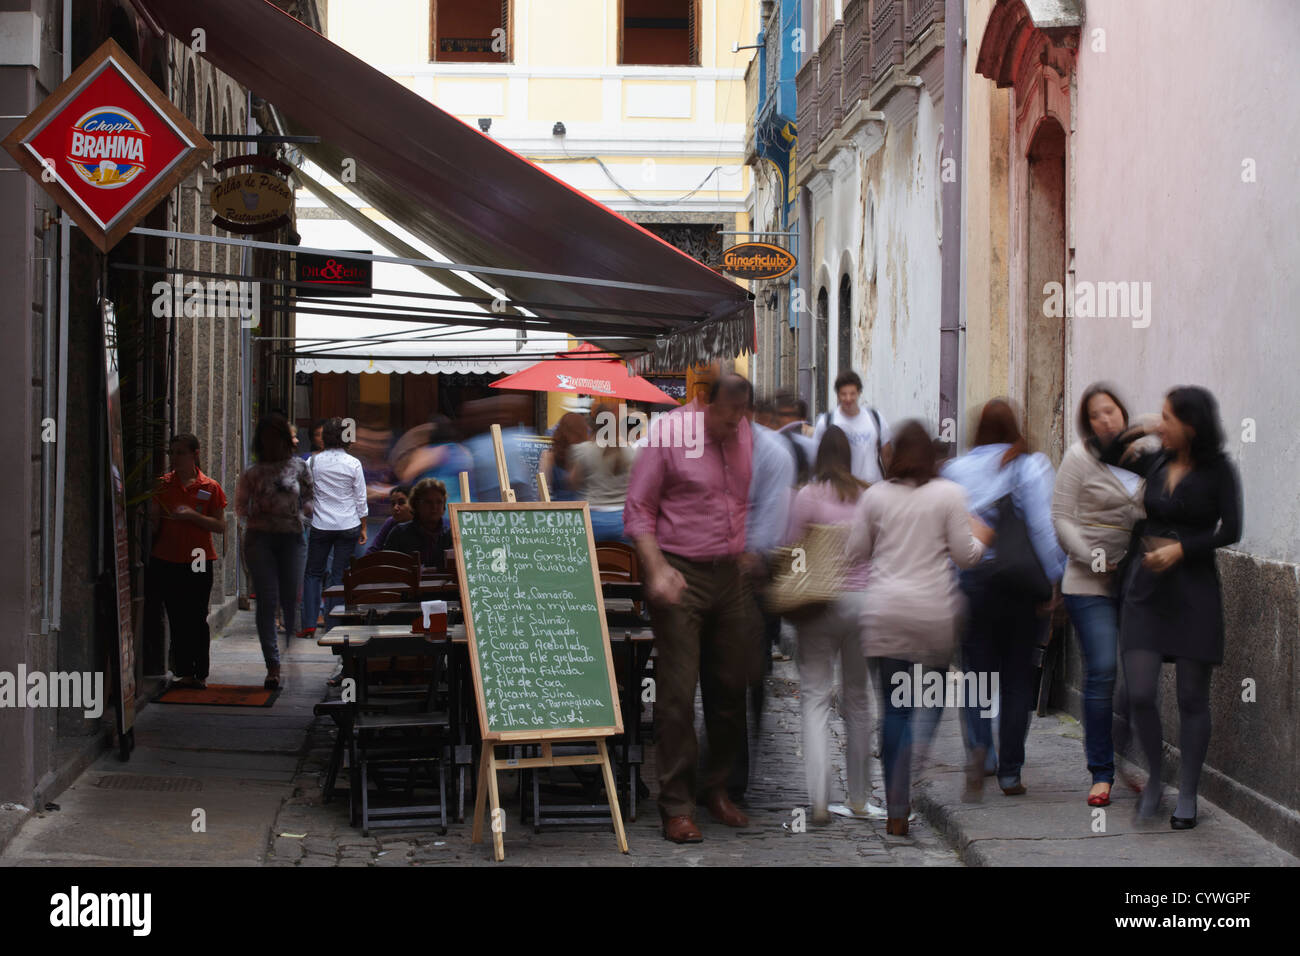 People walking past restaurants on Travessa do Comercio, Centro, Rio de Janeiro, Brazil Stock Photo